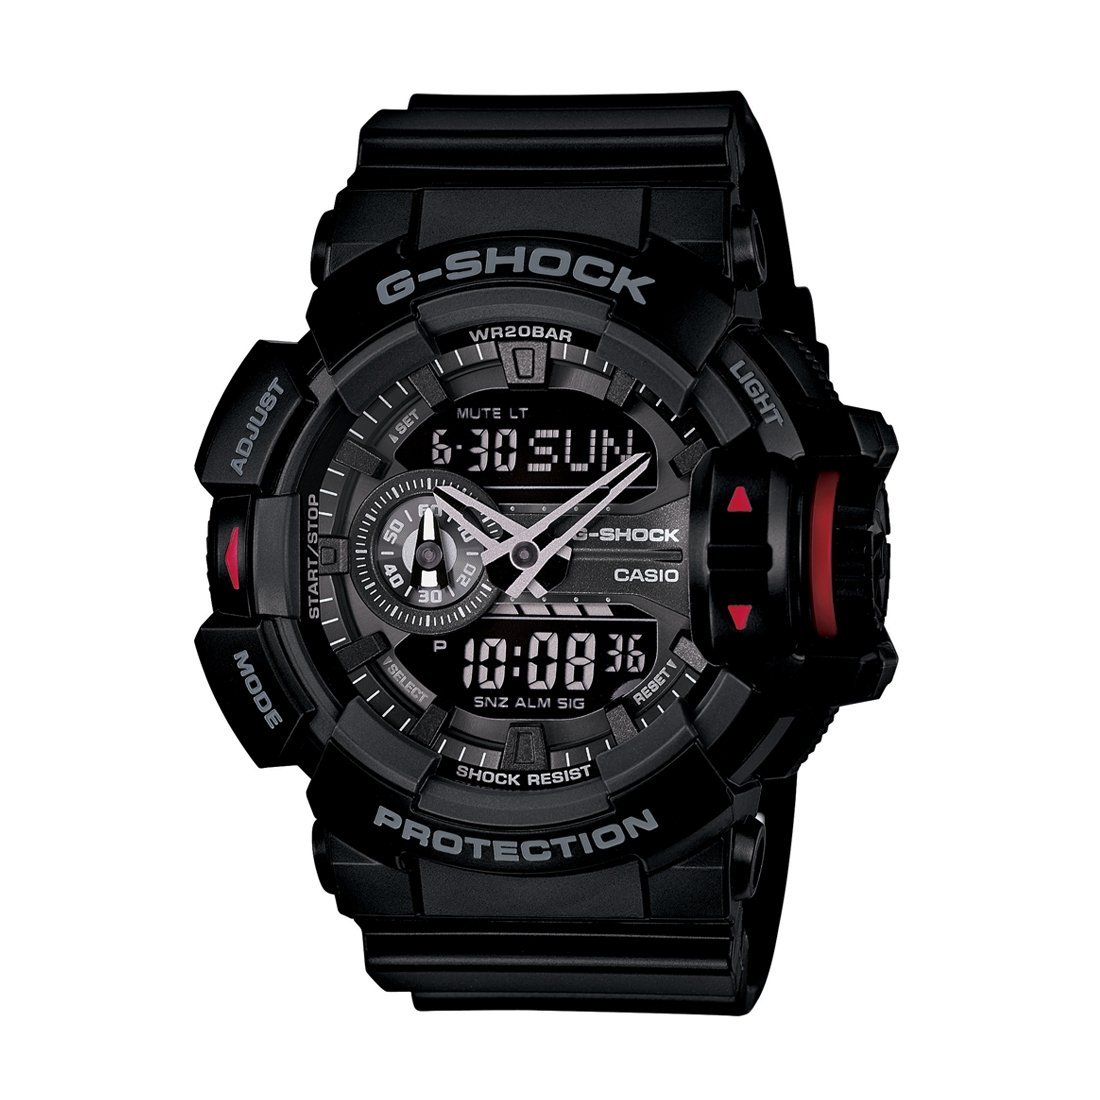 Casio G Shock Rotary Switch Series Analog-Digital Black Watch GA400-1B Watches Casio 